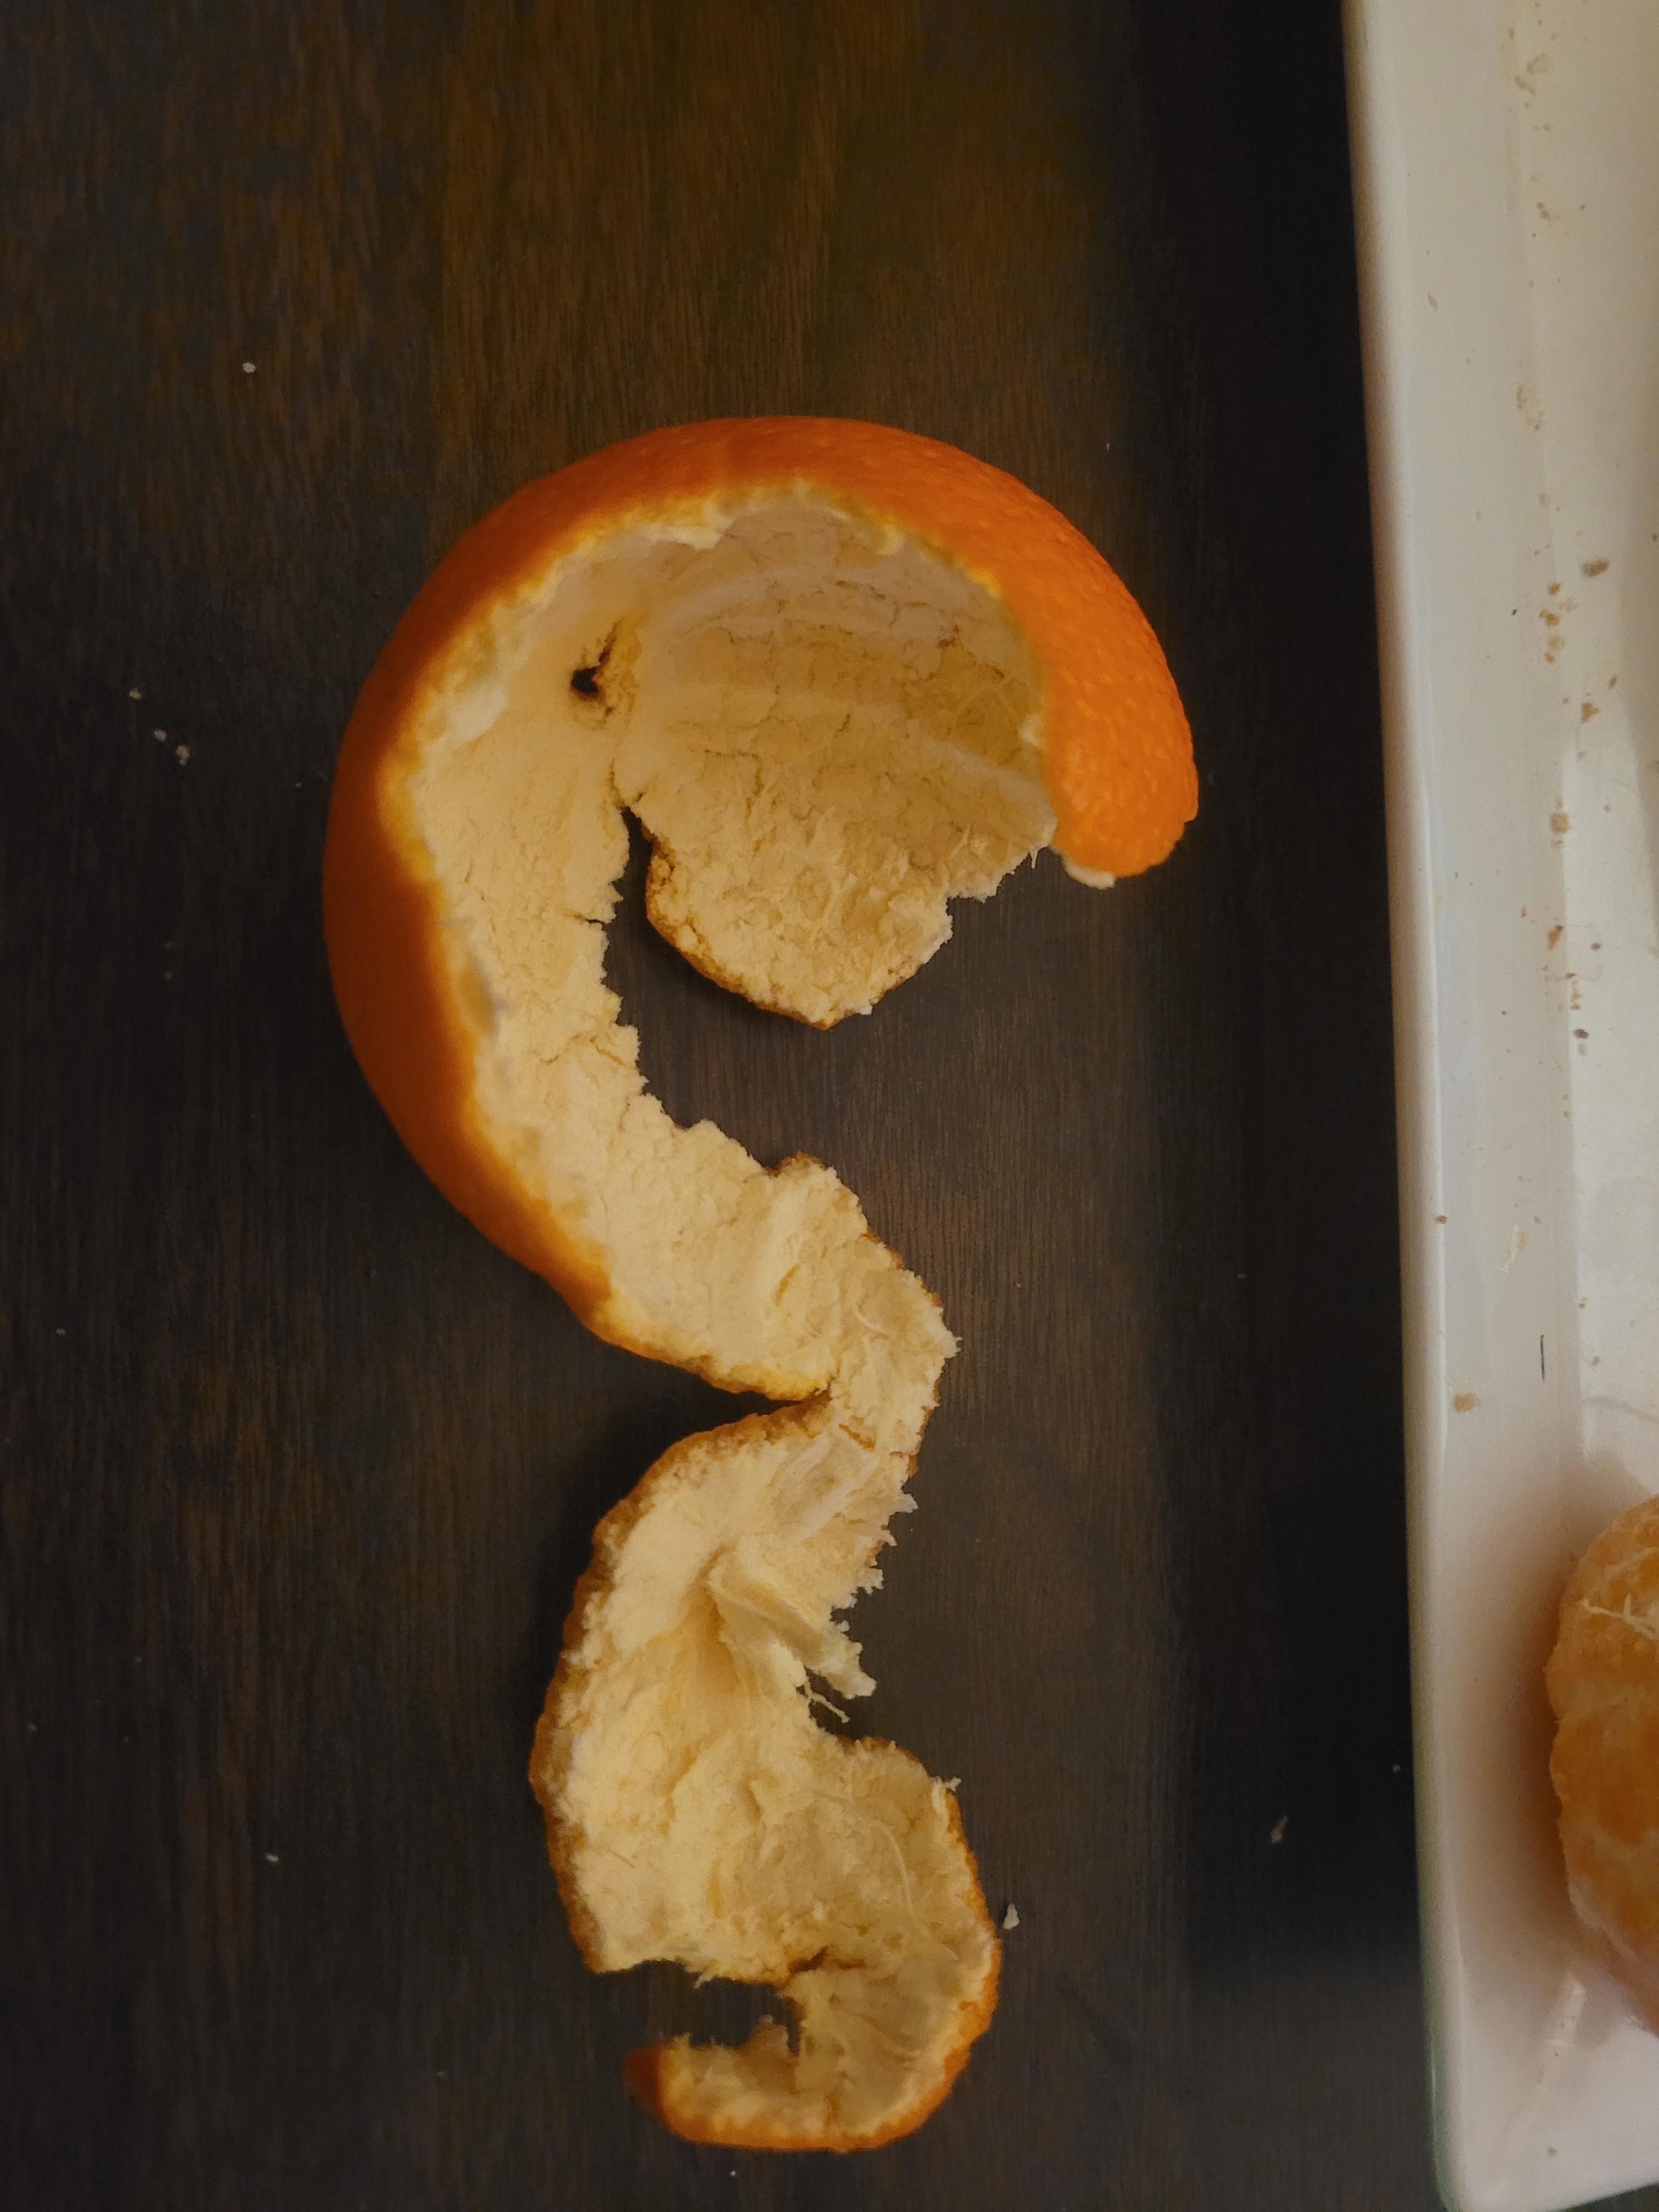 a tangerine peel